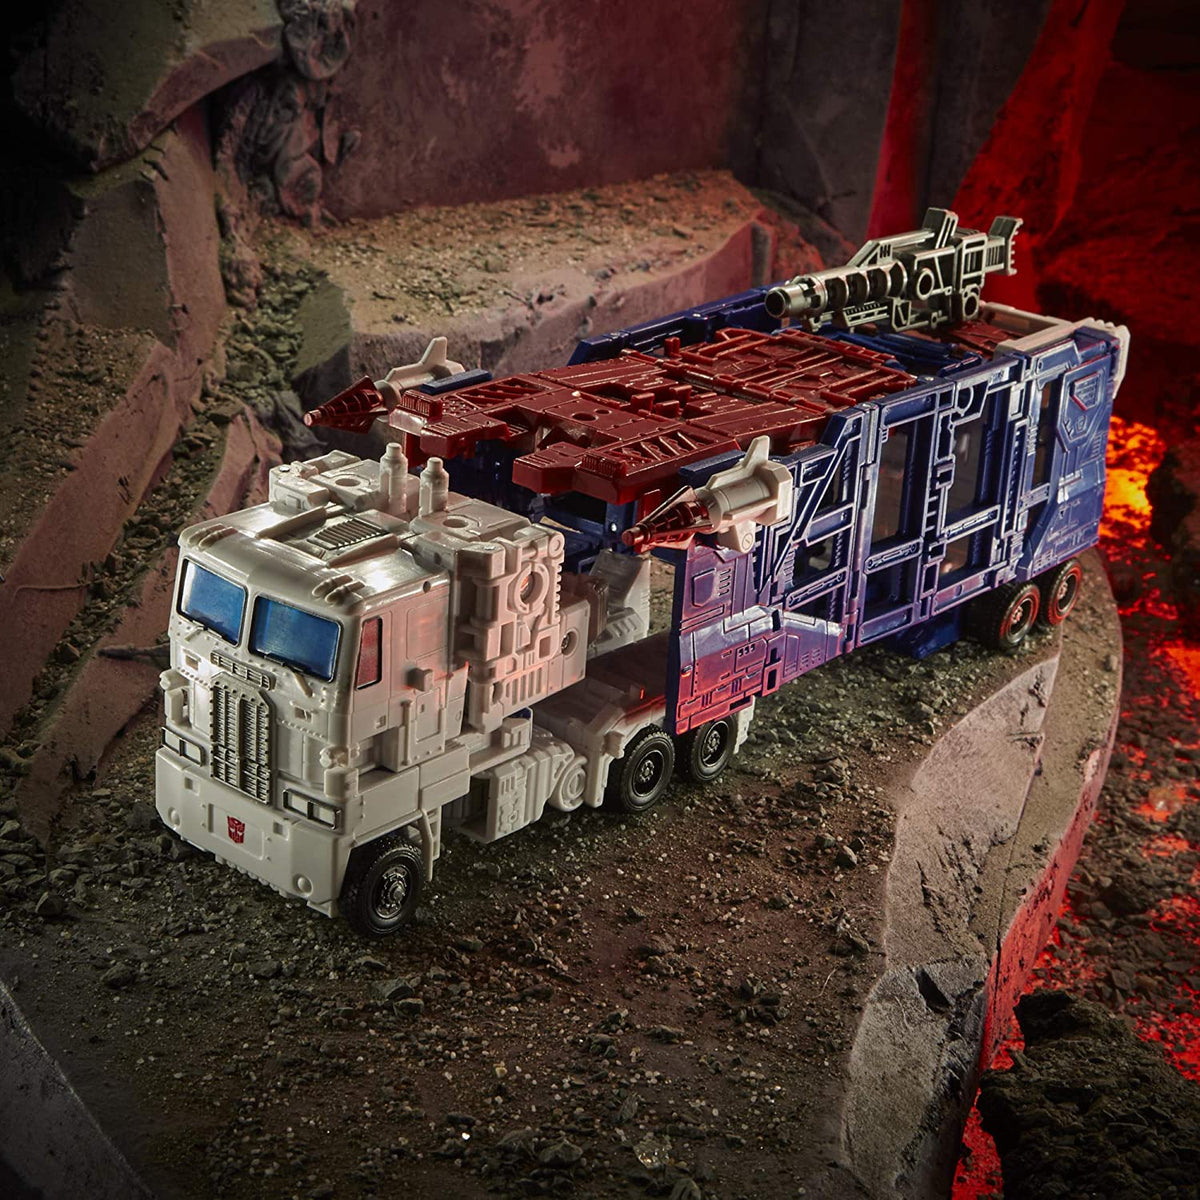 Transformers Toys Generations War for Cybertron: Kingdom Leader WFC-K20 Ultra Magnus Action Figure